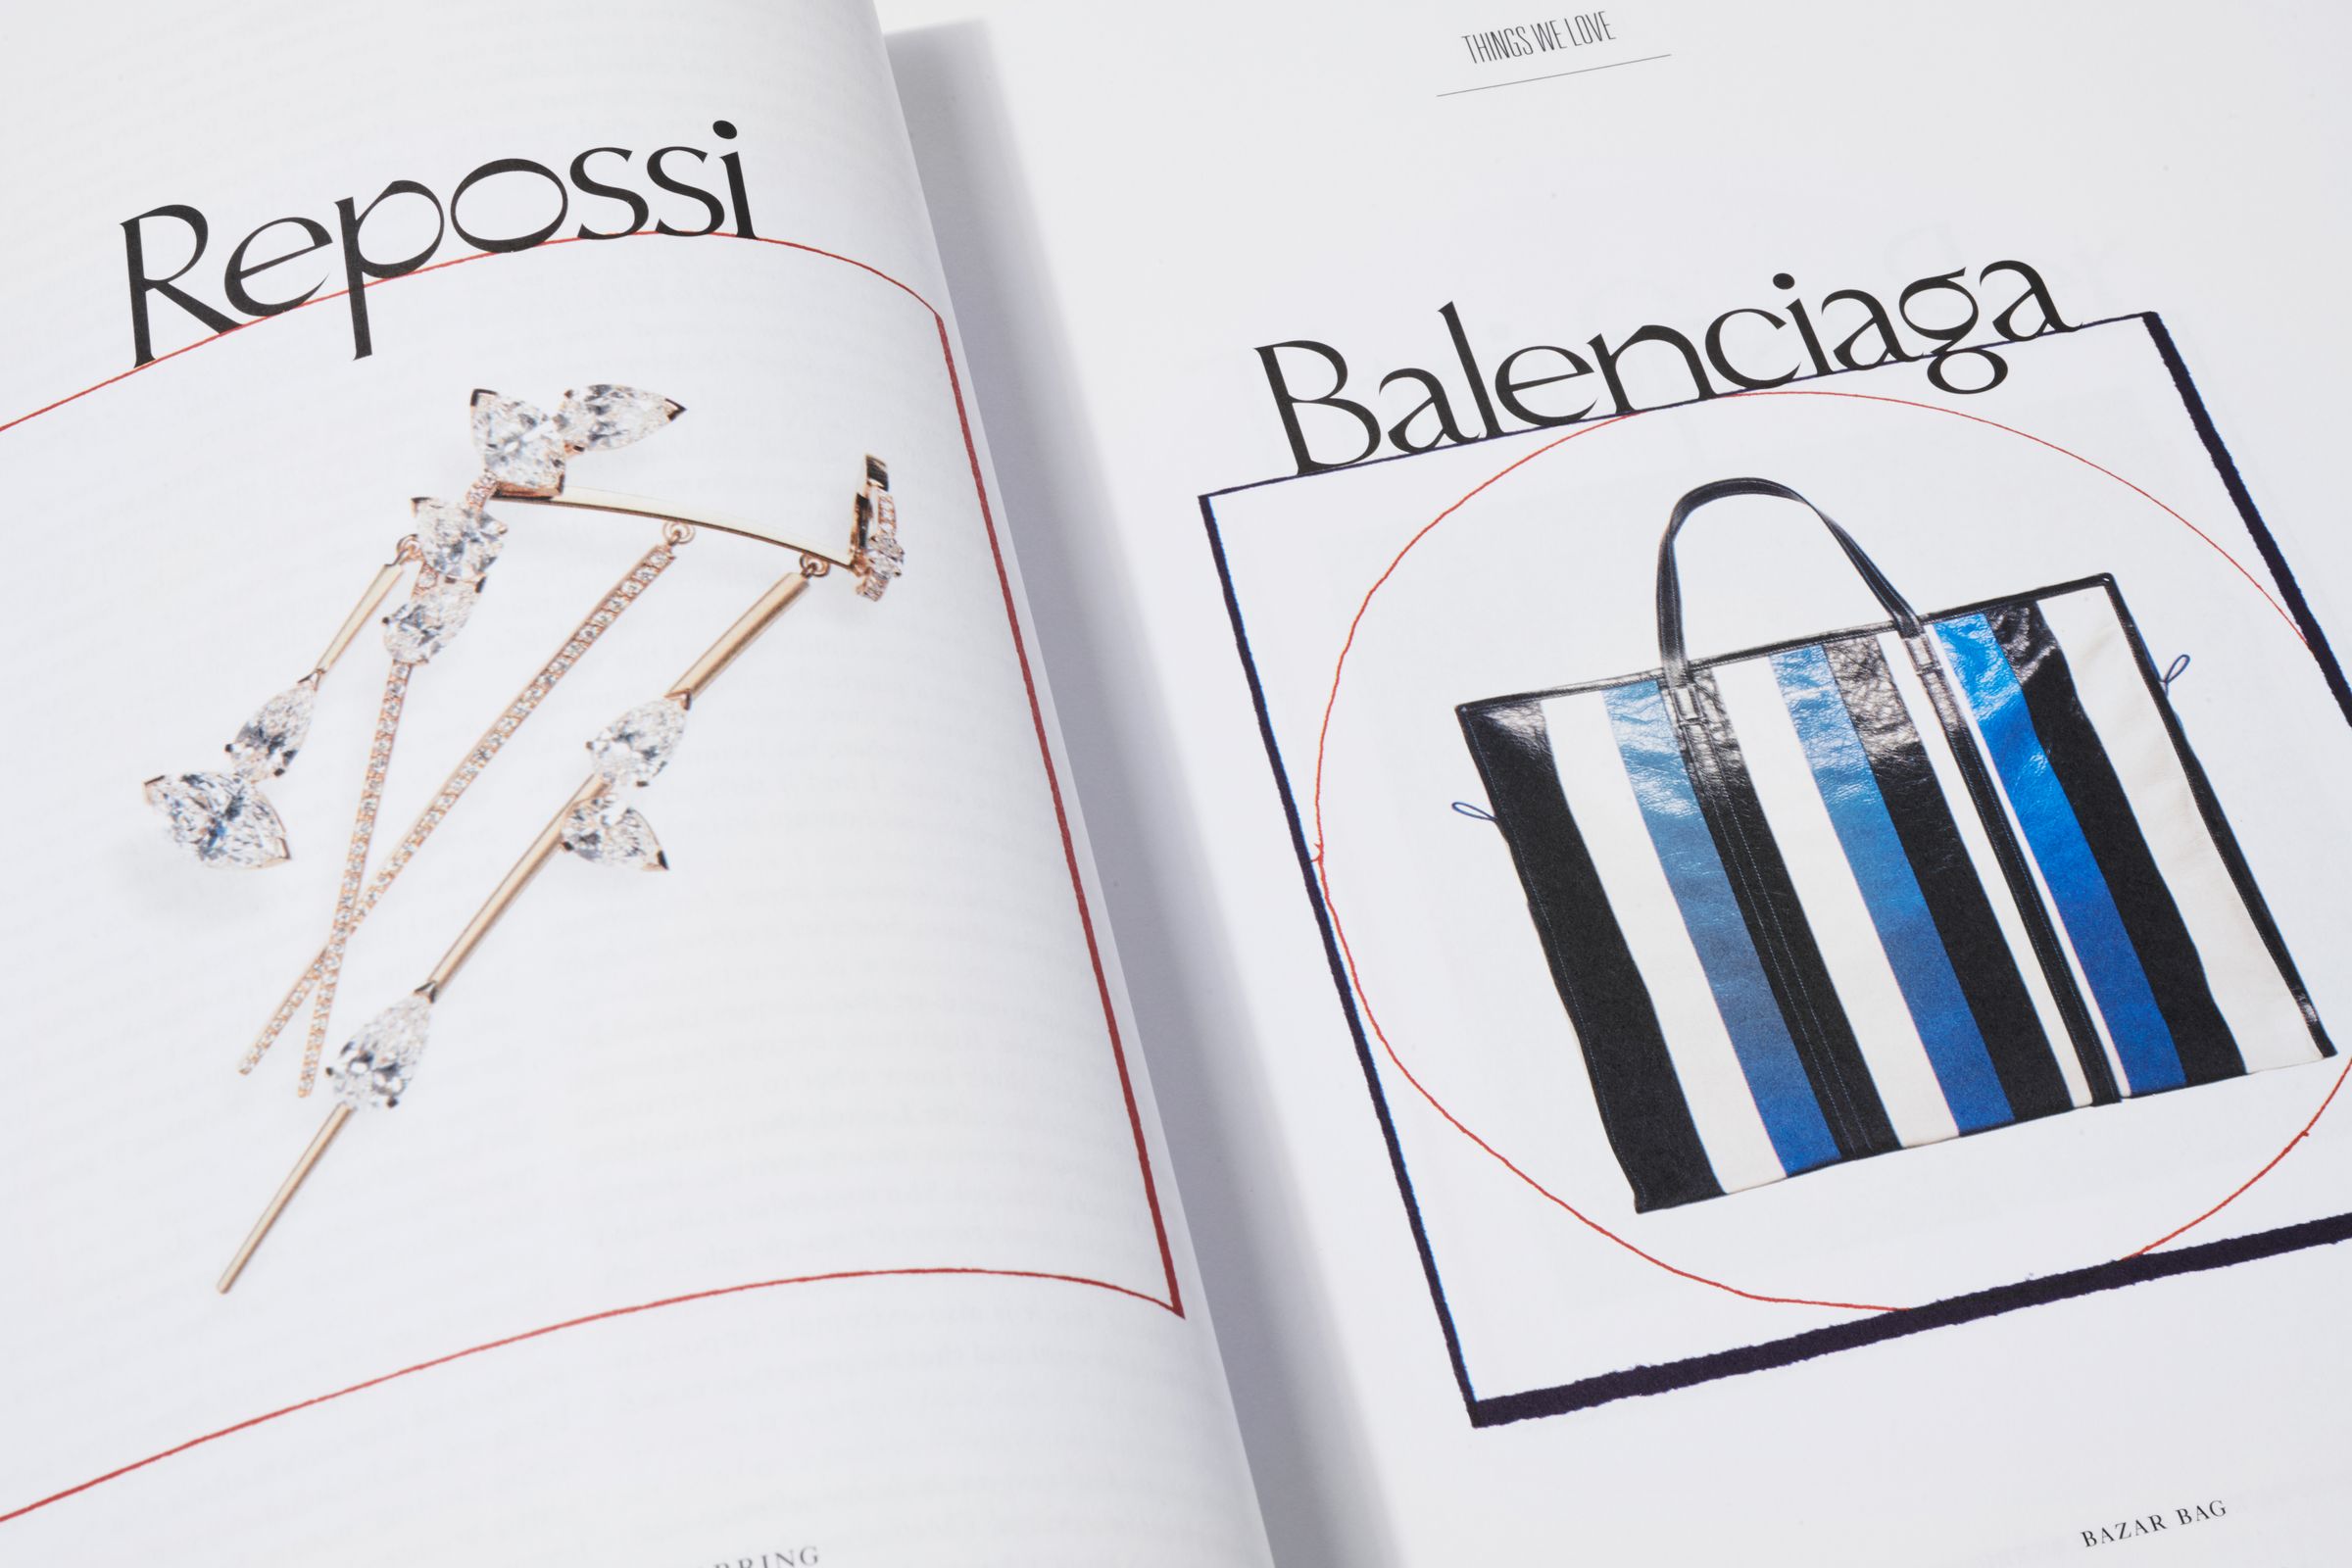 Rika Magazine issue no. 15 Things We Love: Repossi and Balenciaga